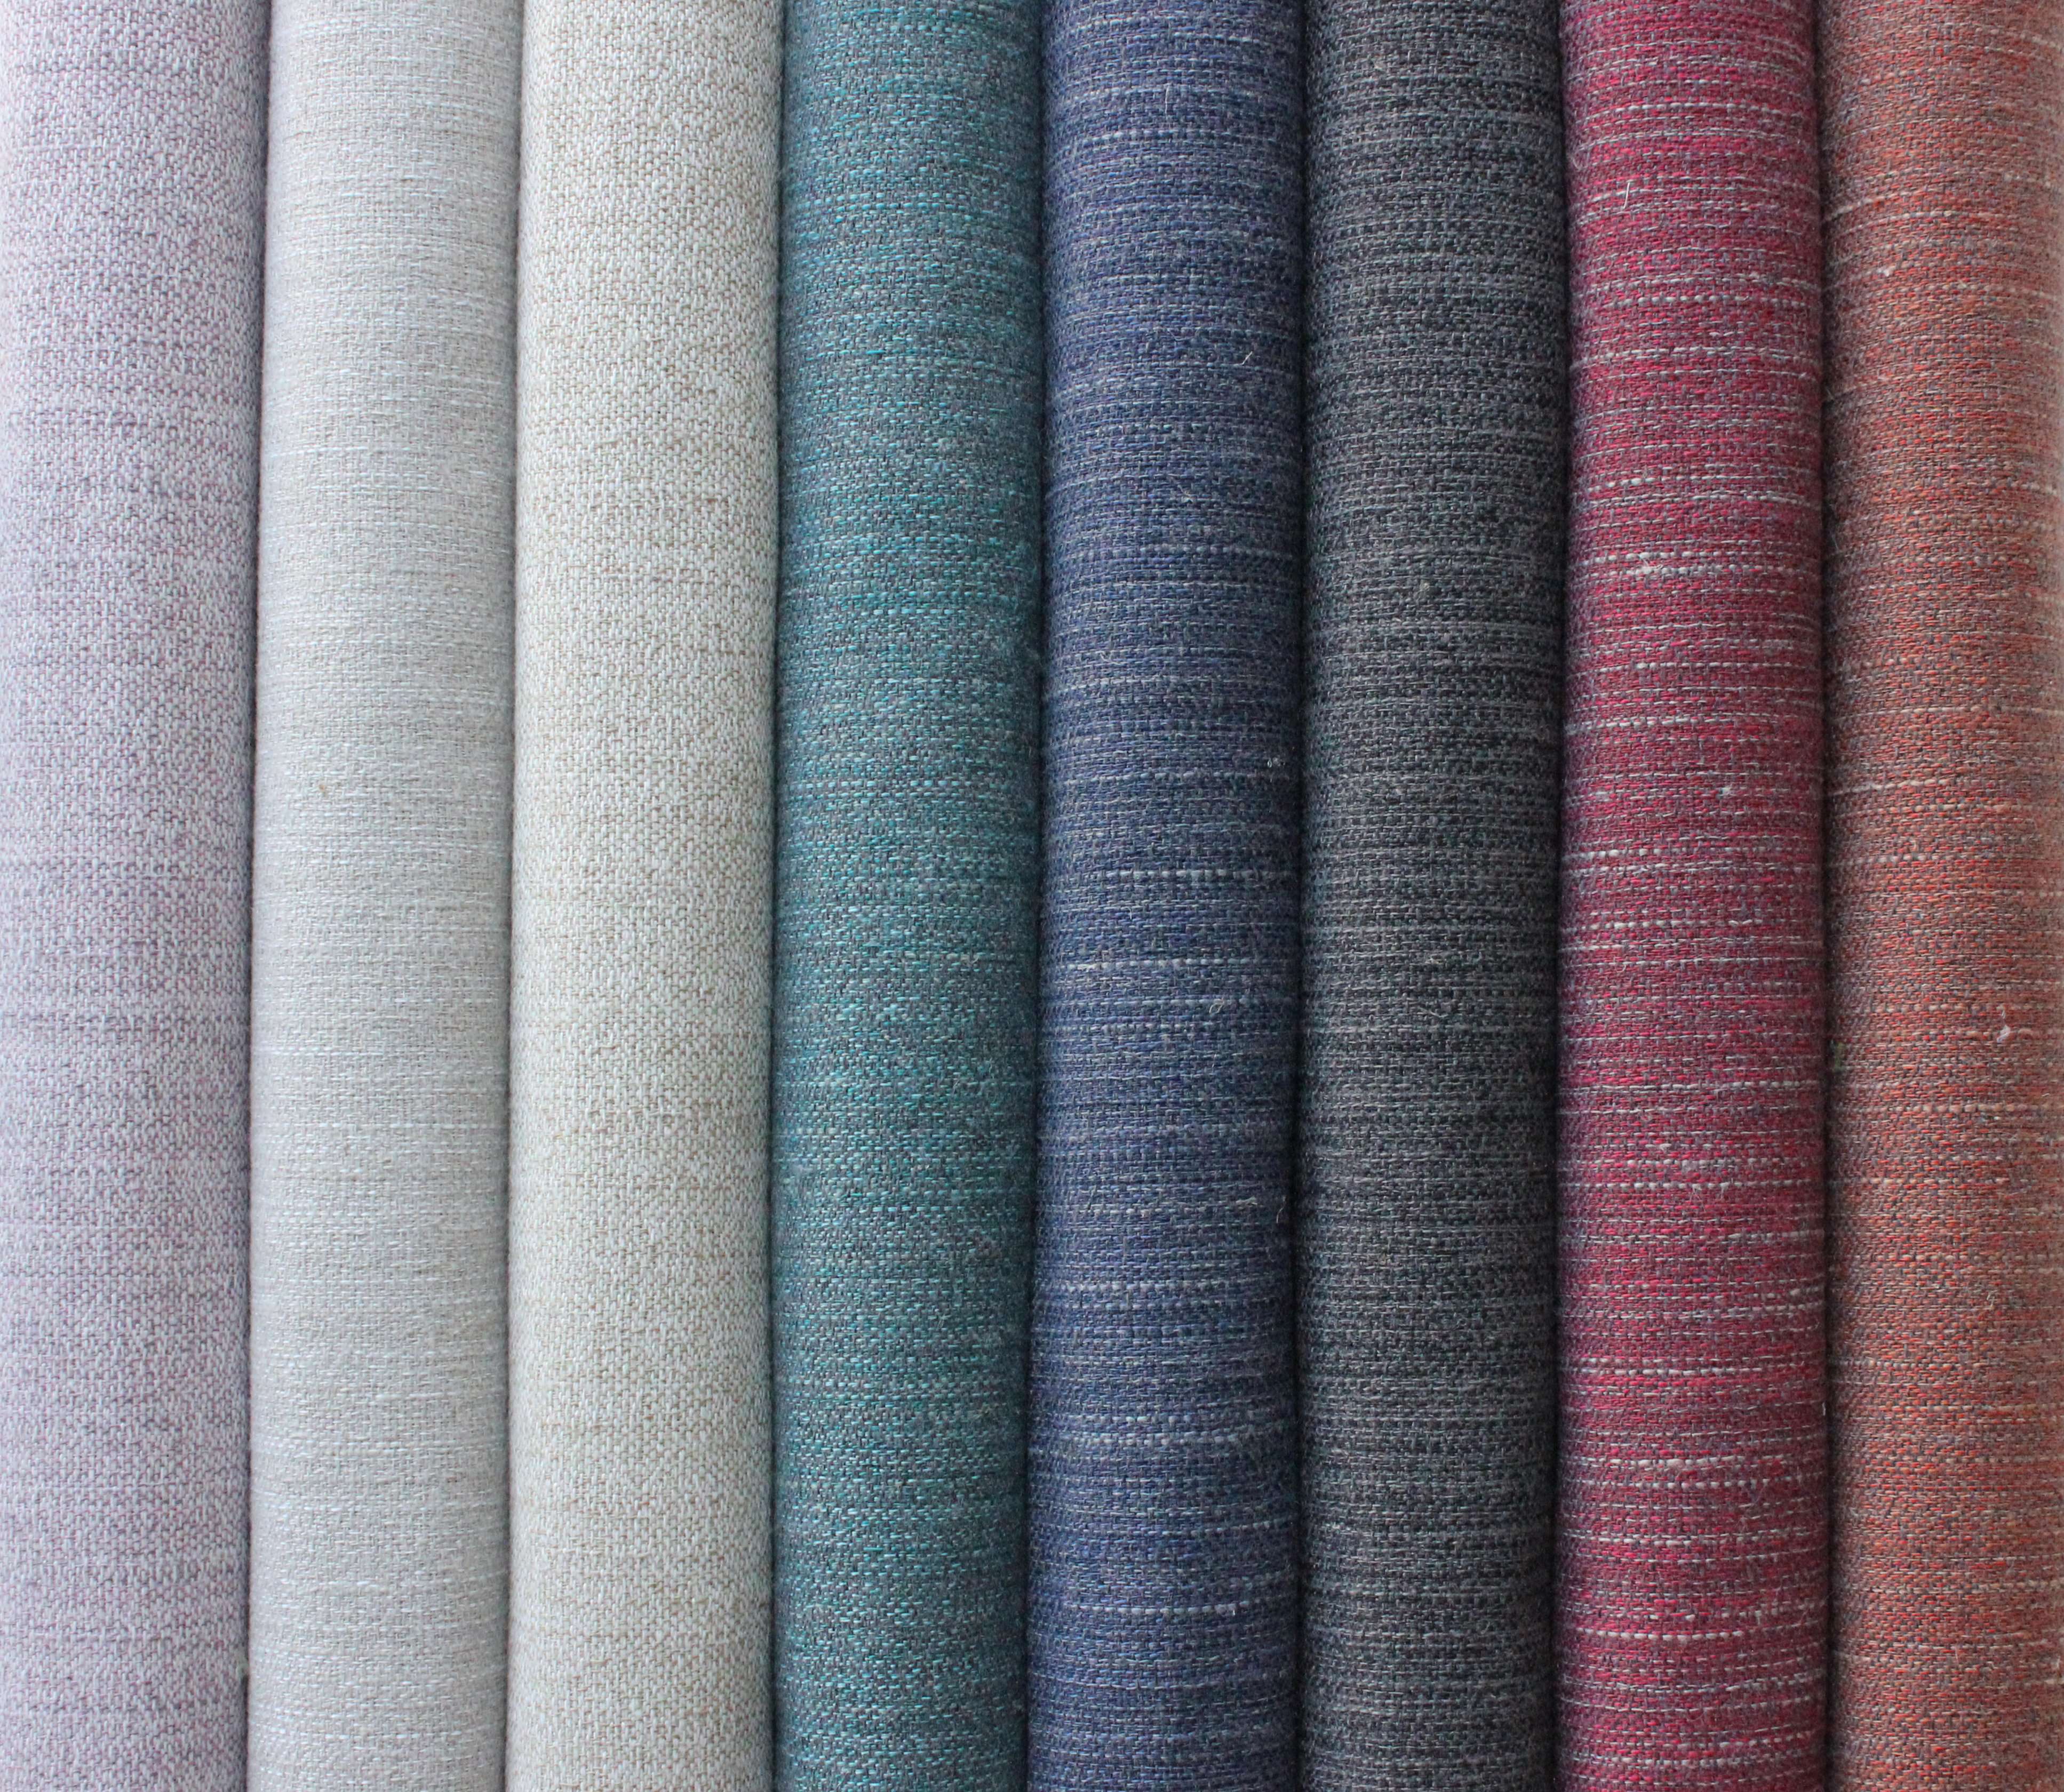 McAlister Textiles Hamleton Rustic Linen Blend Teal Plain Fabric Fabrics 